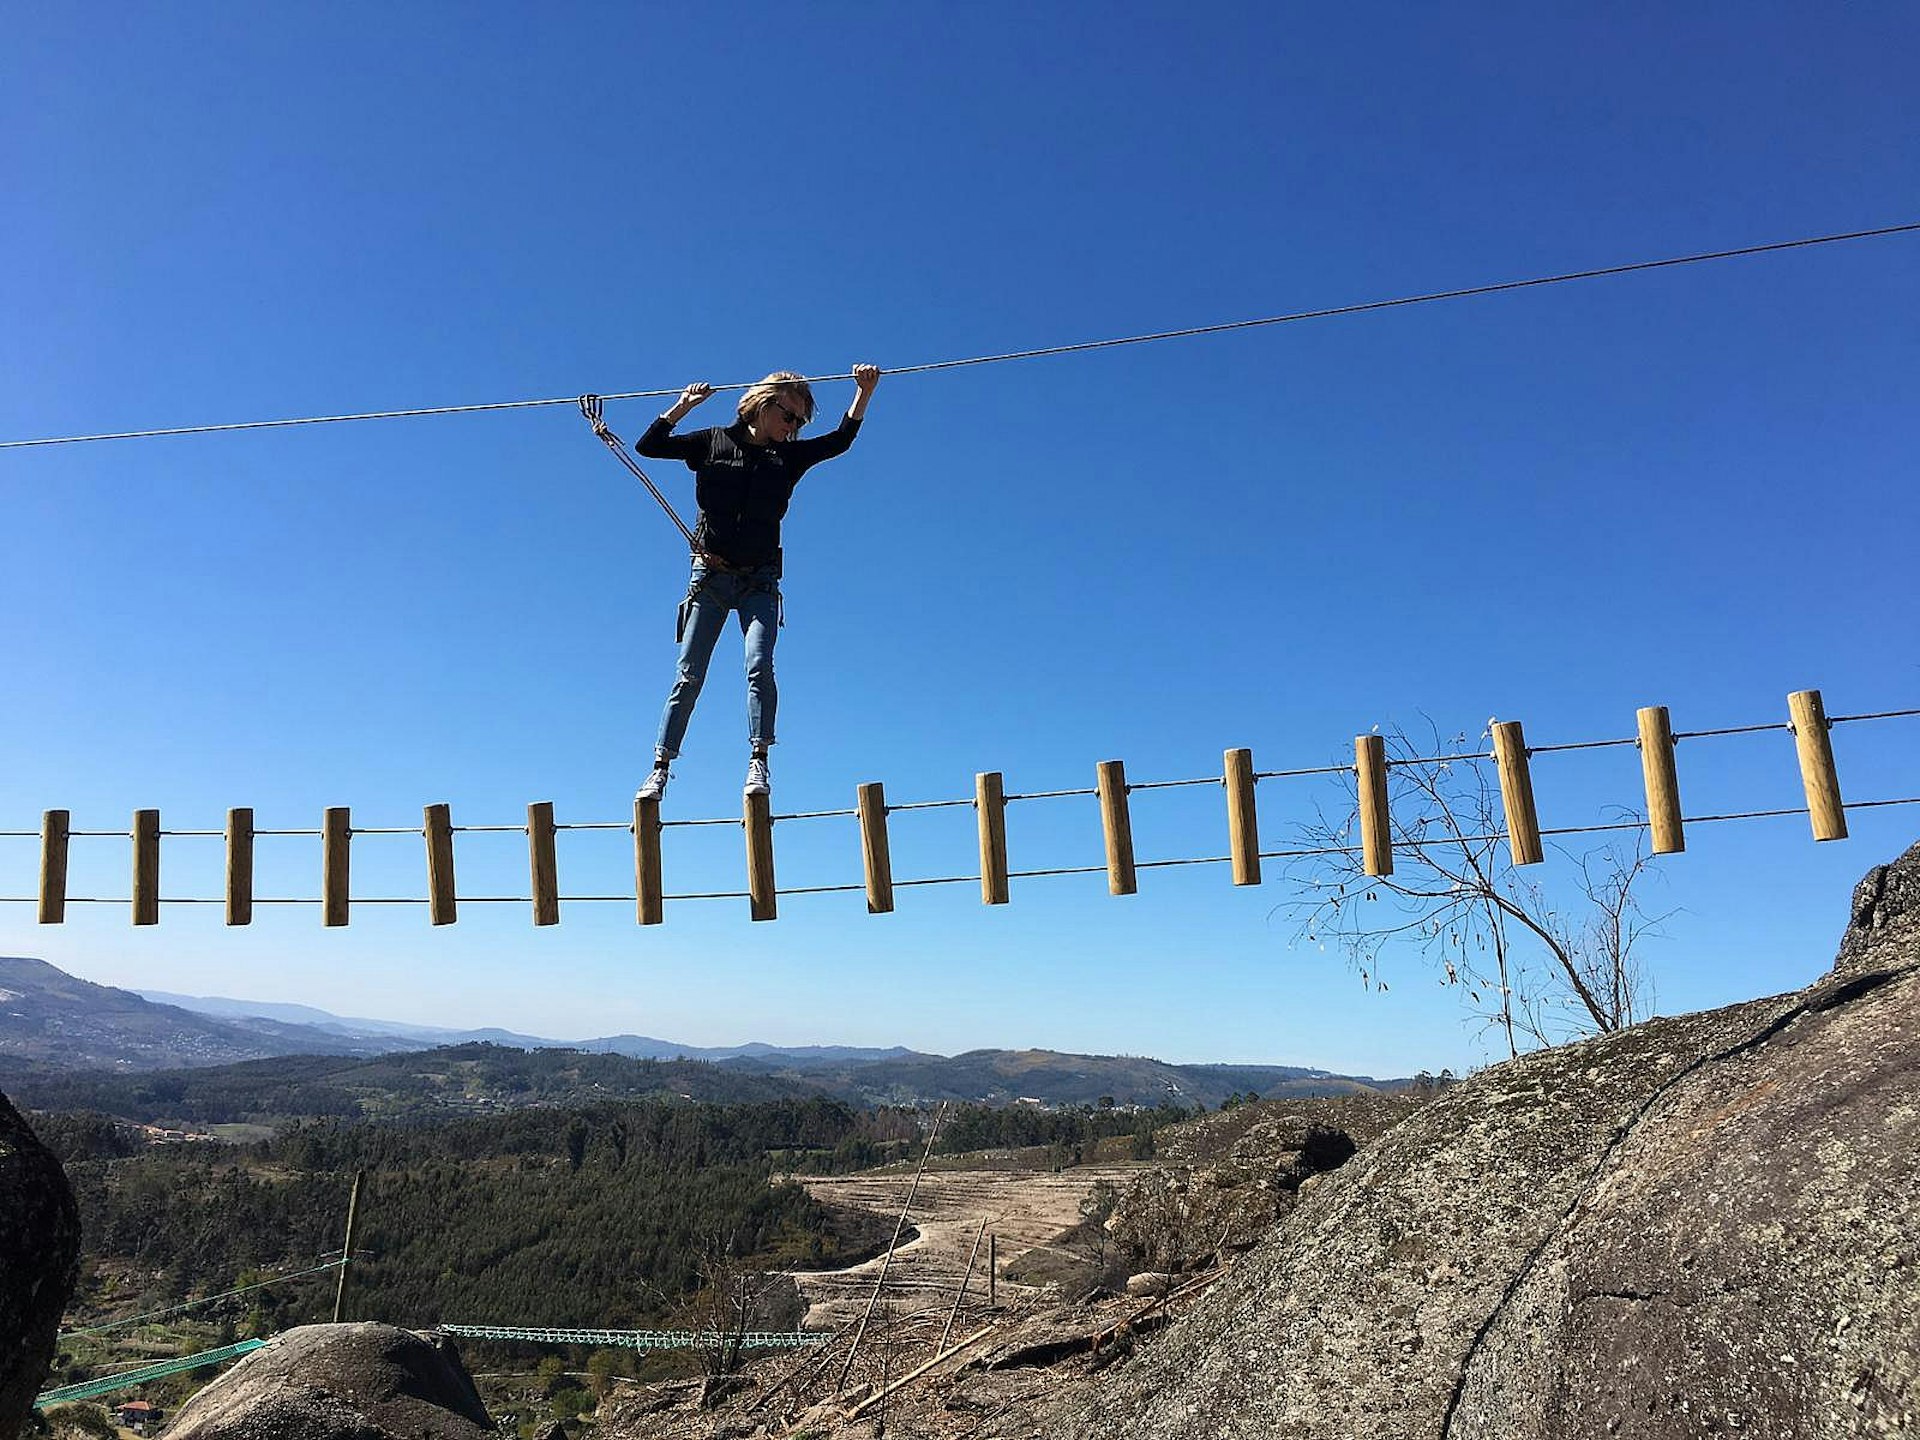 A woman traverses a rope suspension bridge amid rocky hillside scenery.